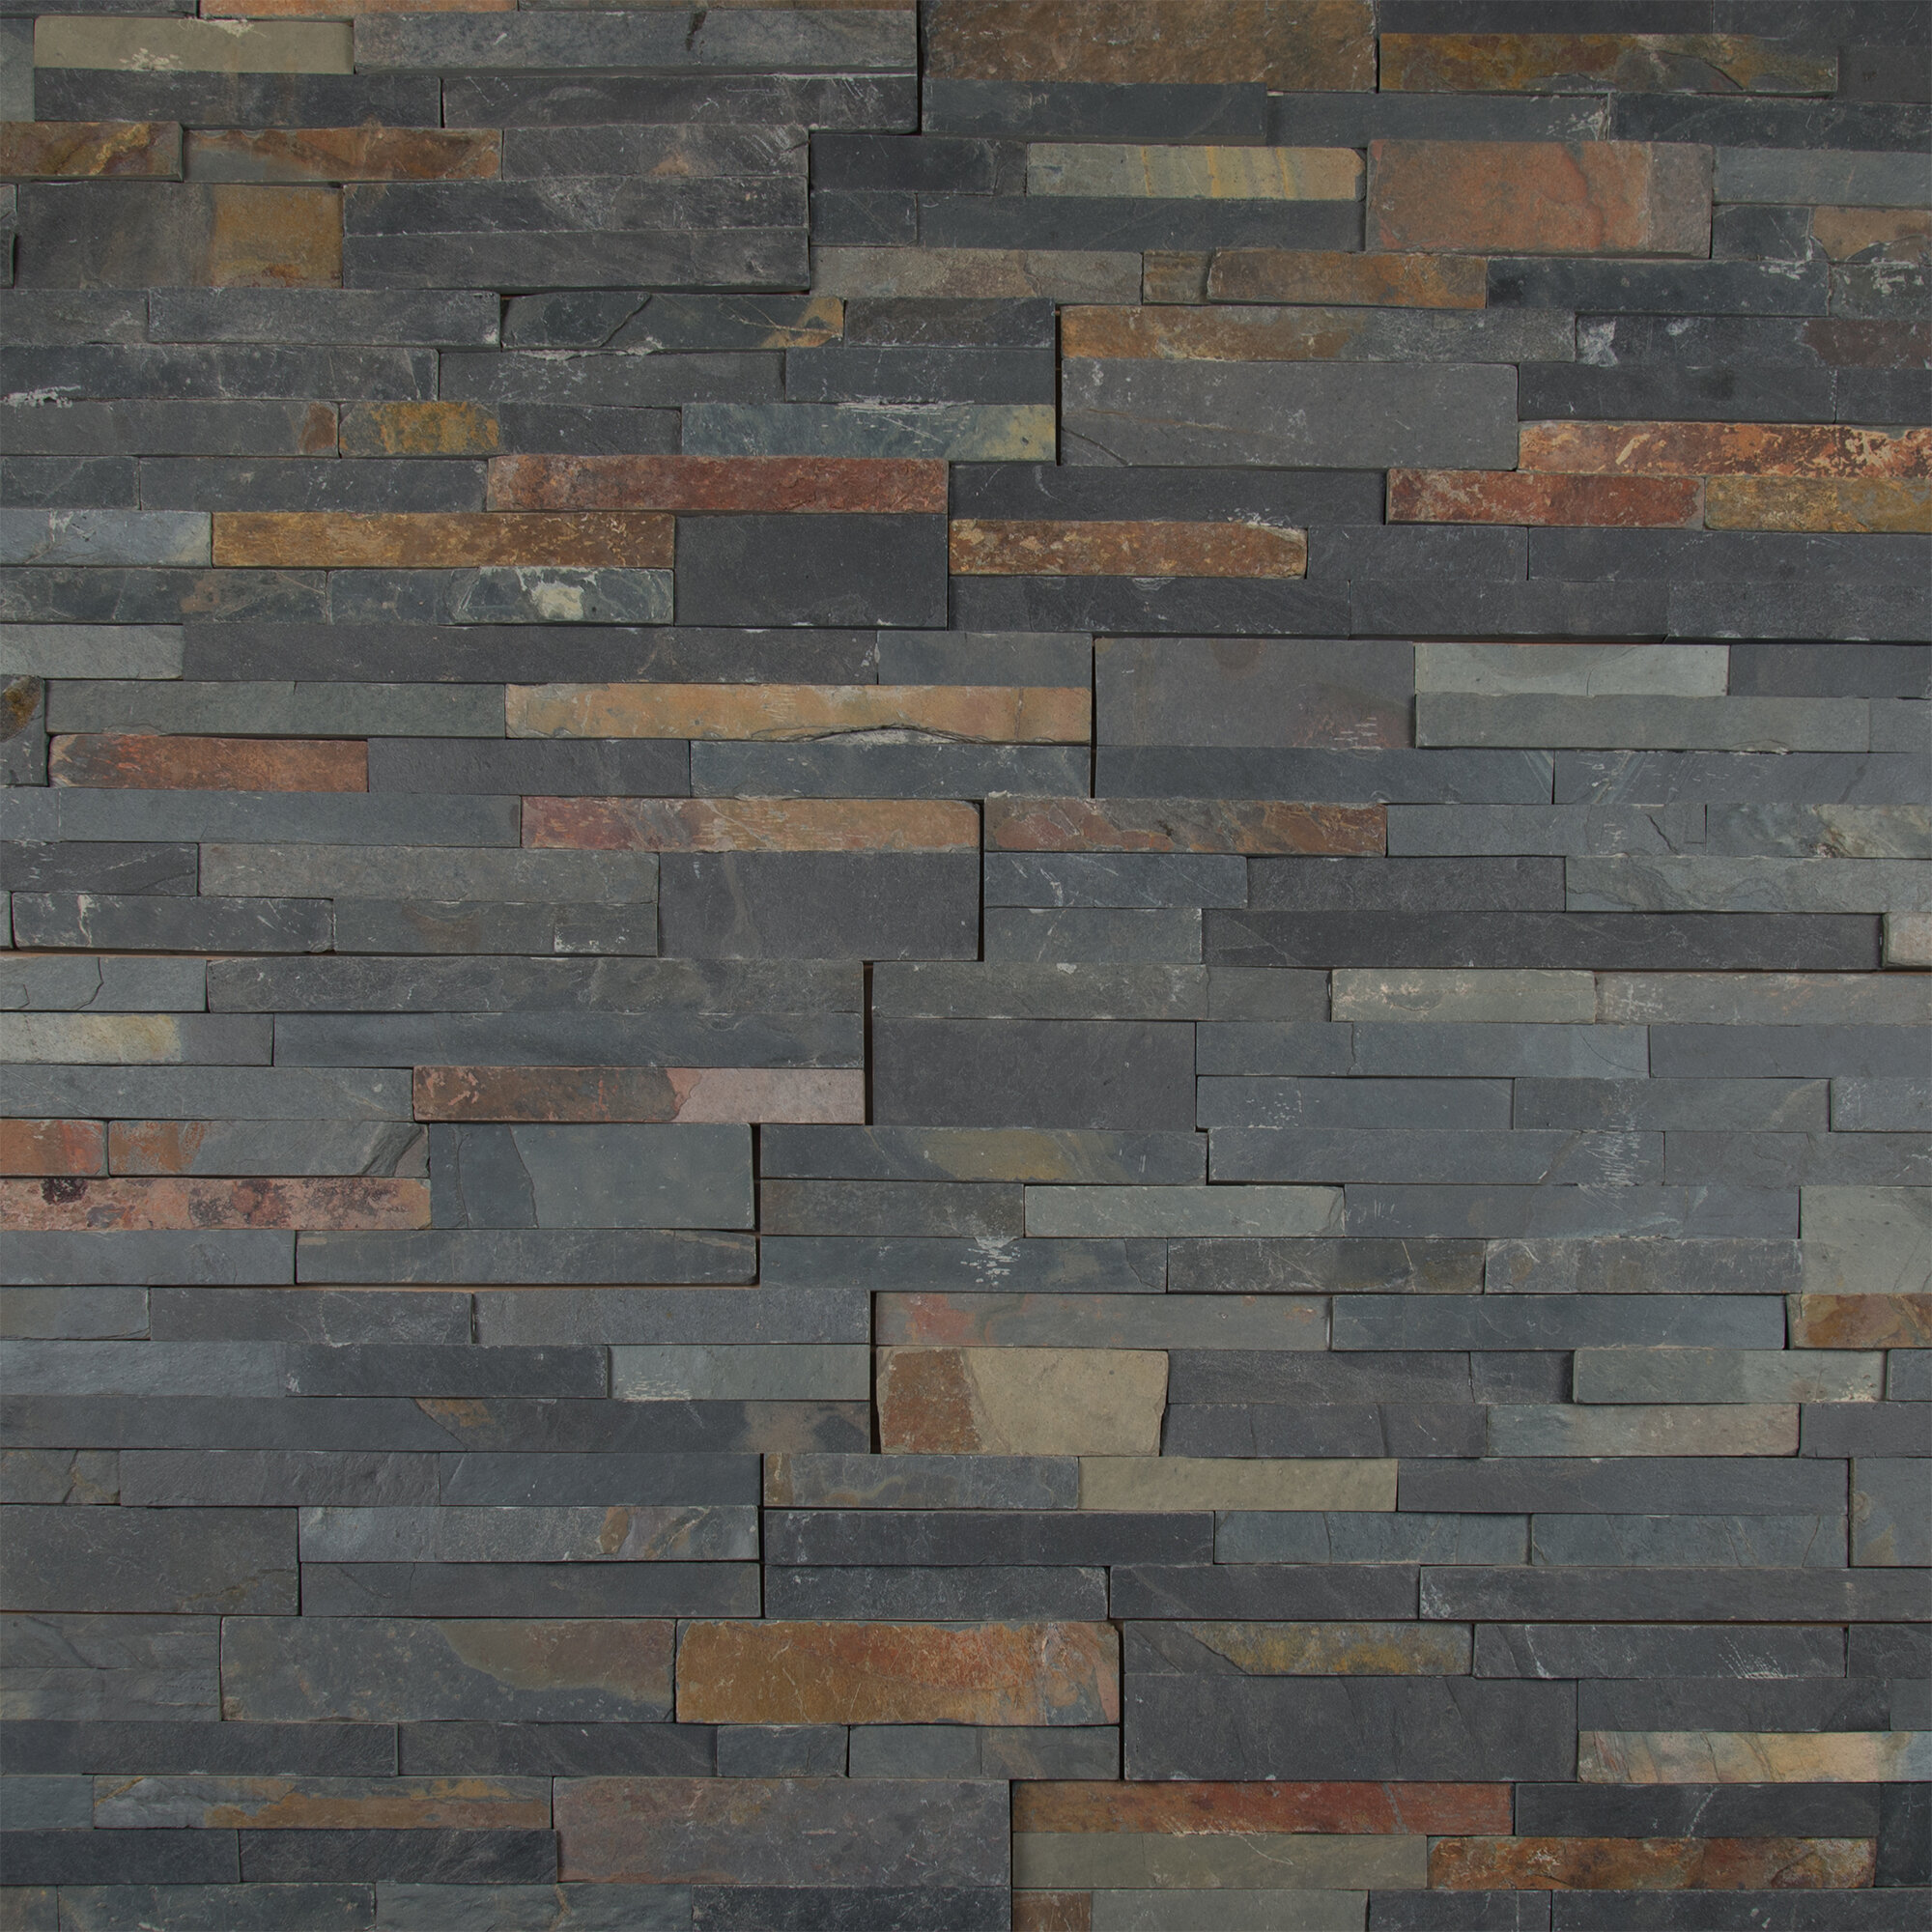 Textured Floor Tiles Wall Tiles Free Shipping Over 35 Wayfair